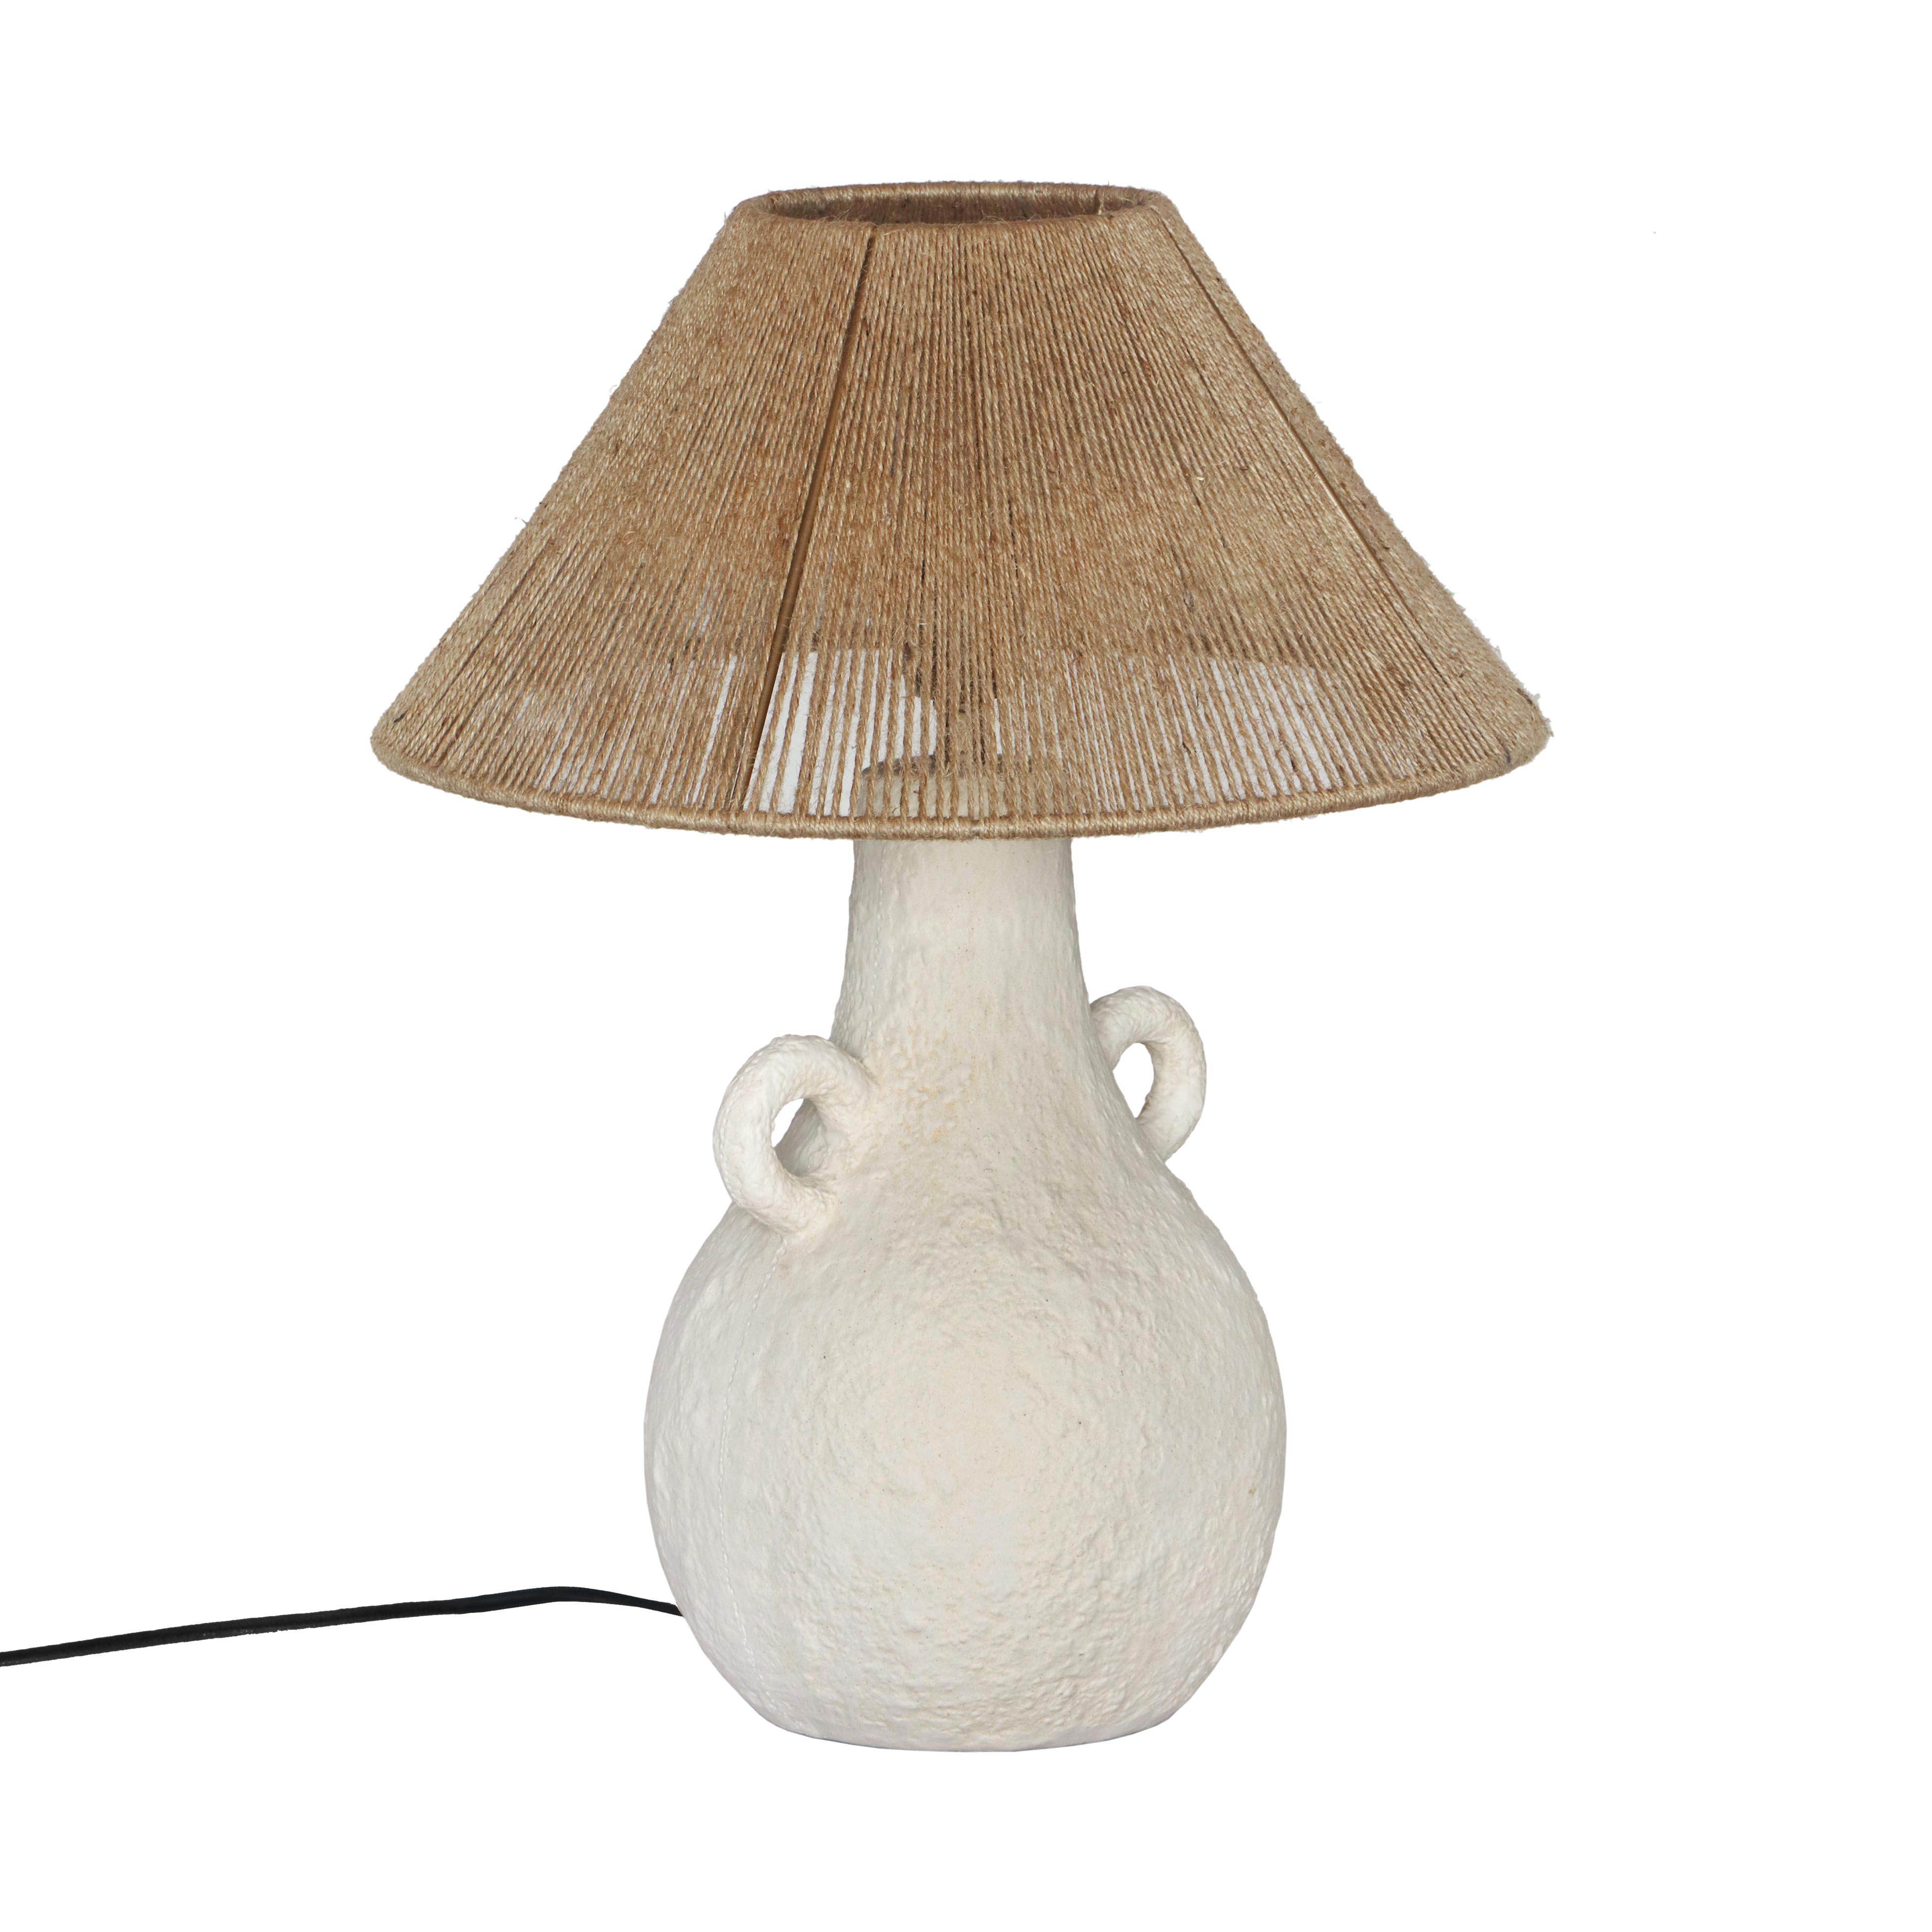 Lalit Natural & White Ceramic Table Lamp - Image 1